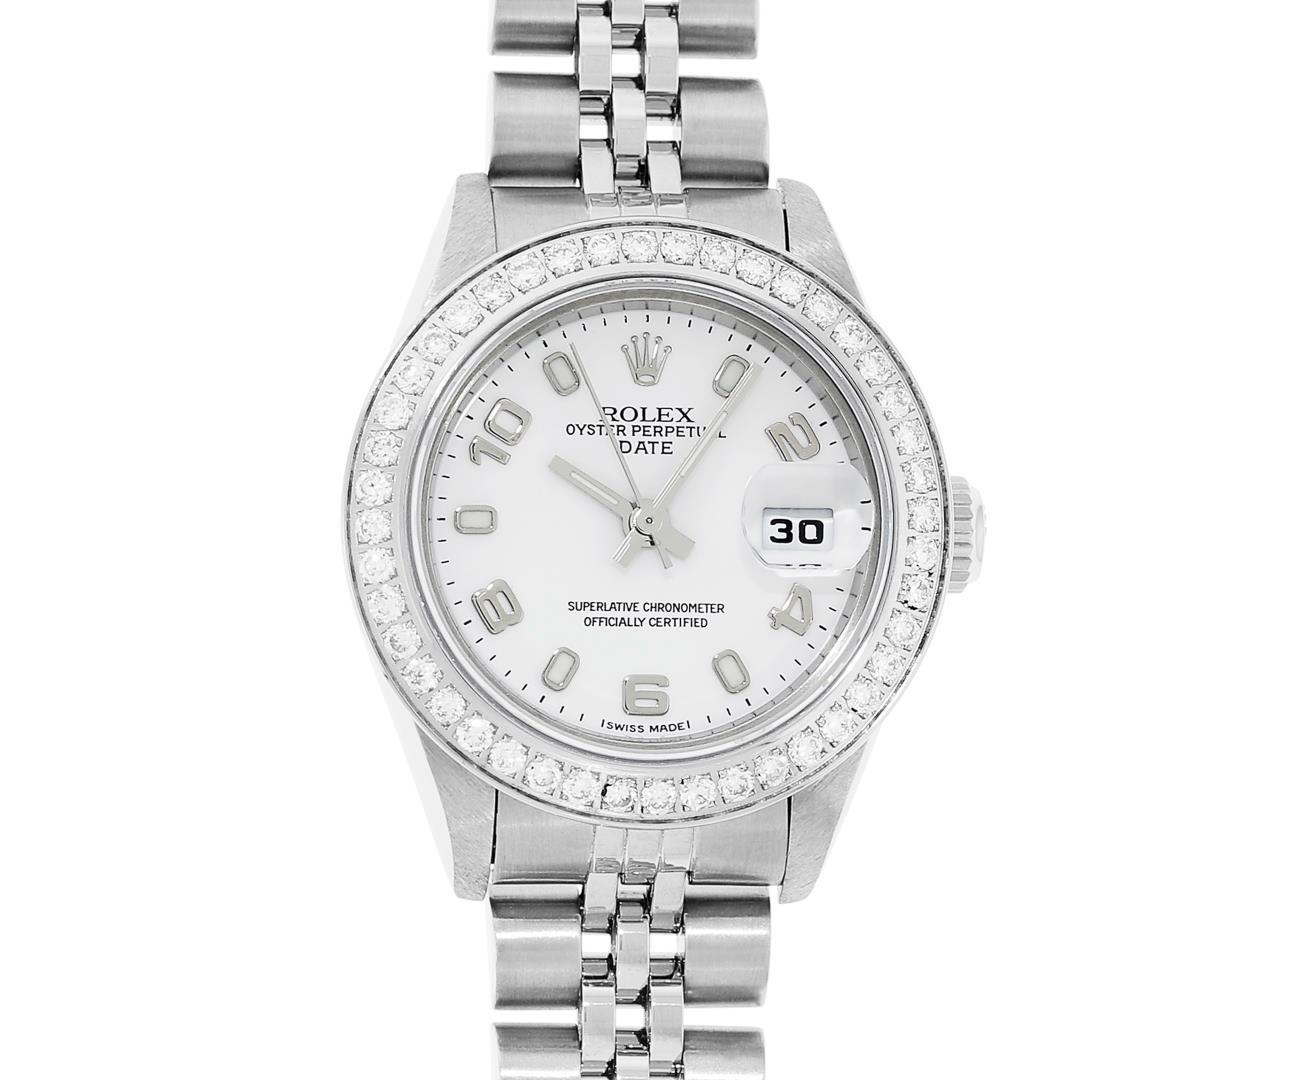 Rolex Ladies Stainless Steel White Arabic Diamond Datejust Wristwatch